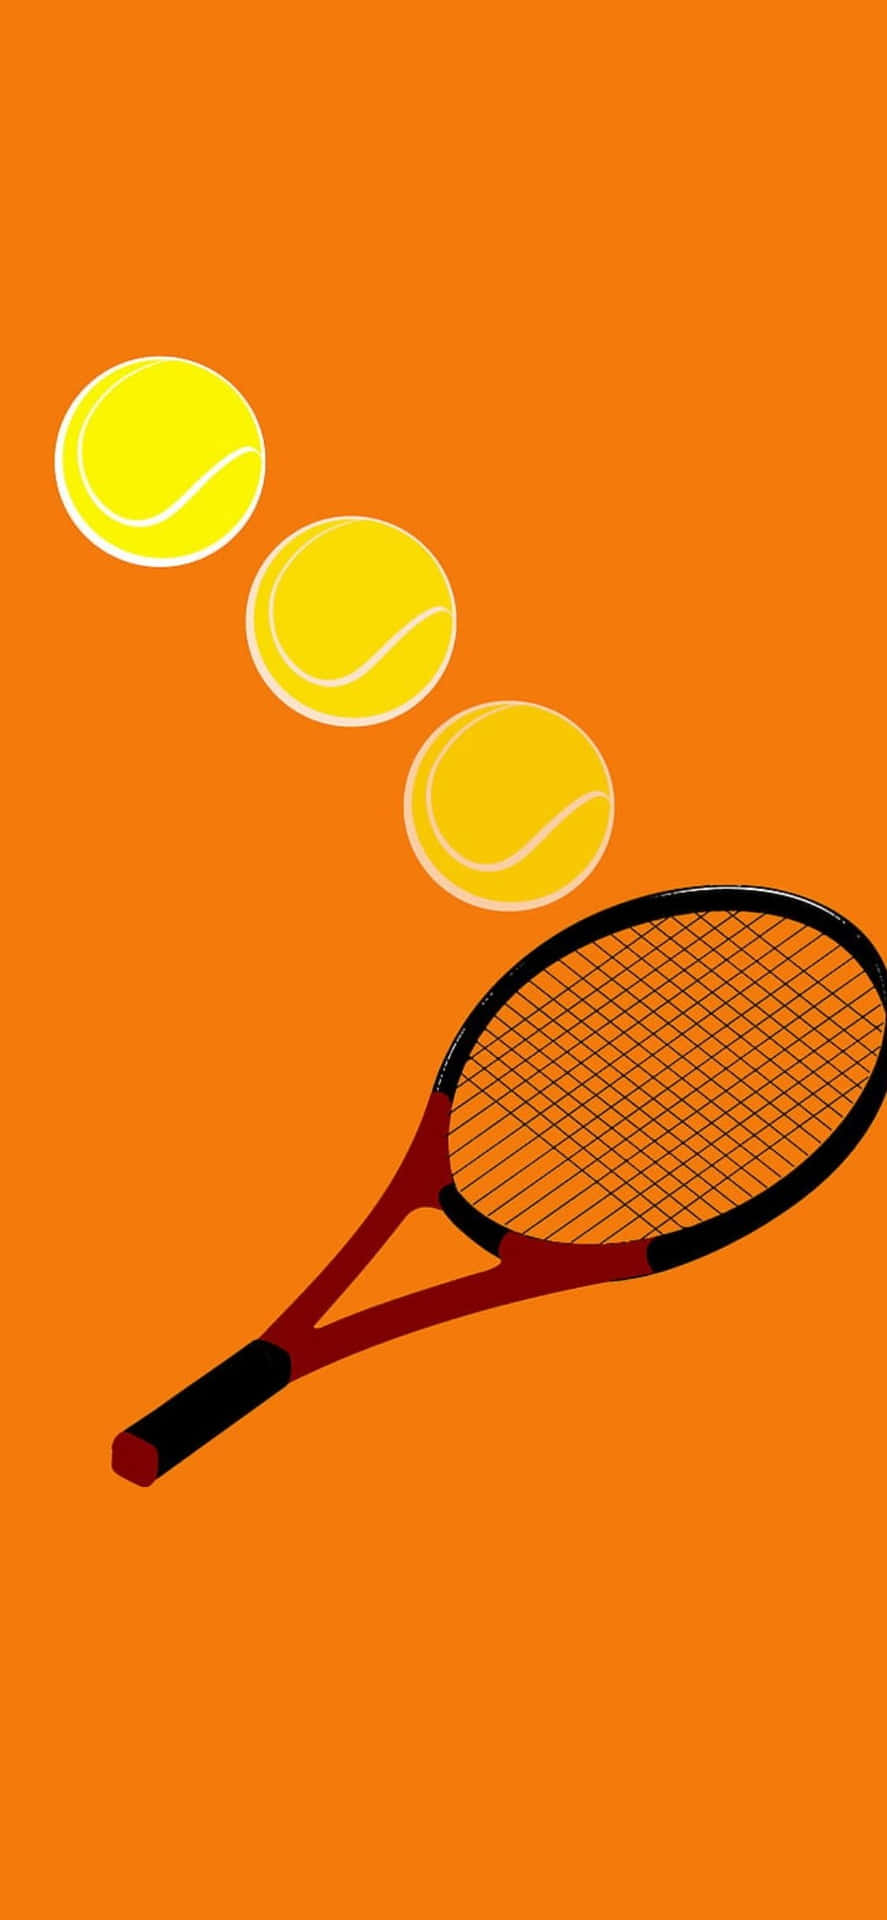 Iphonexs Tennis Bakgrund.